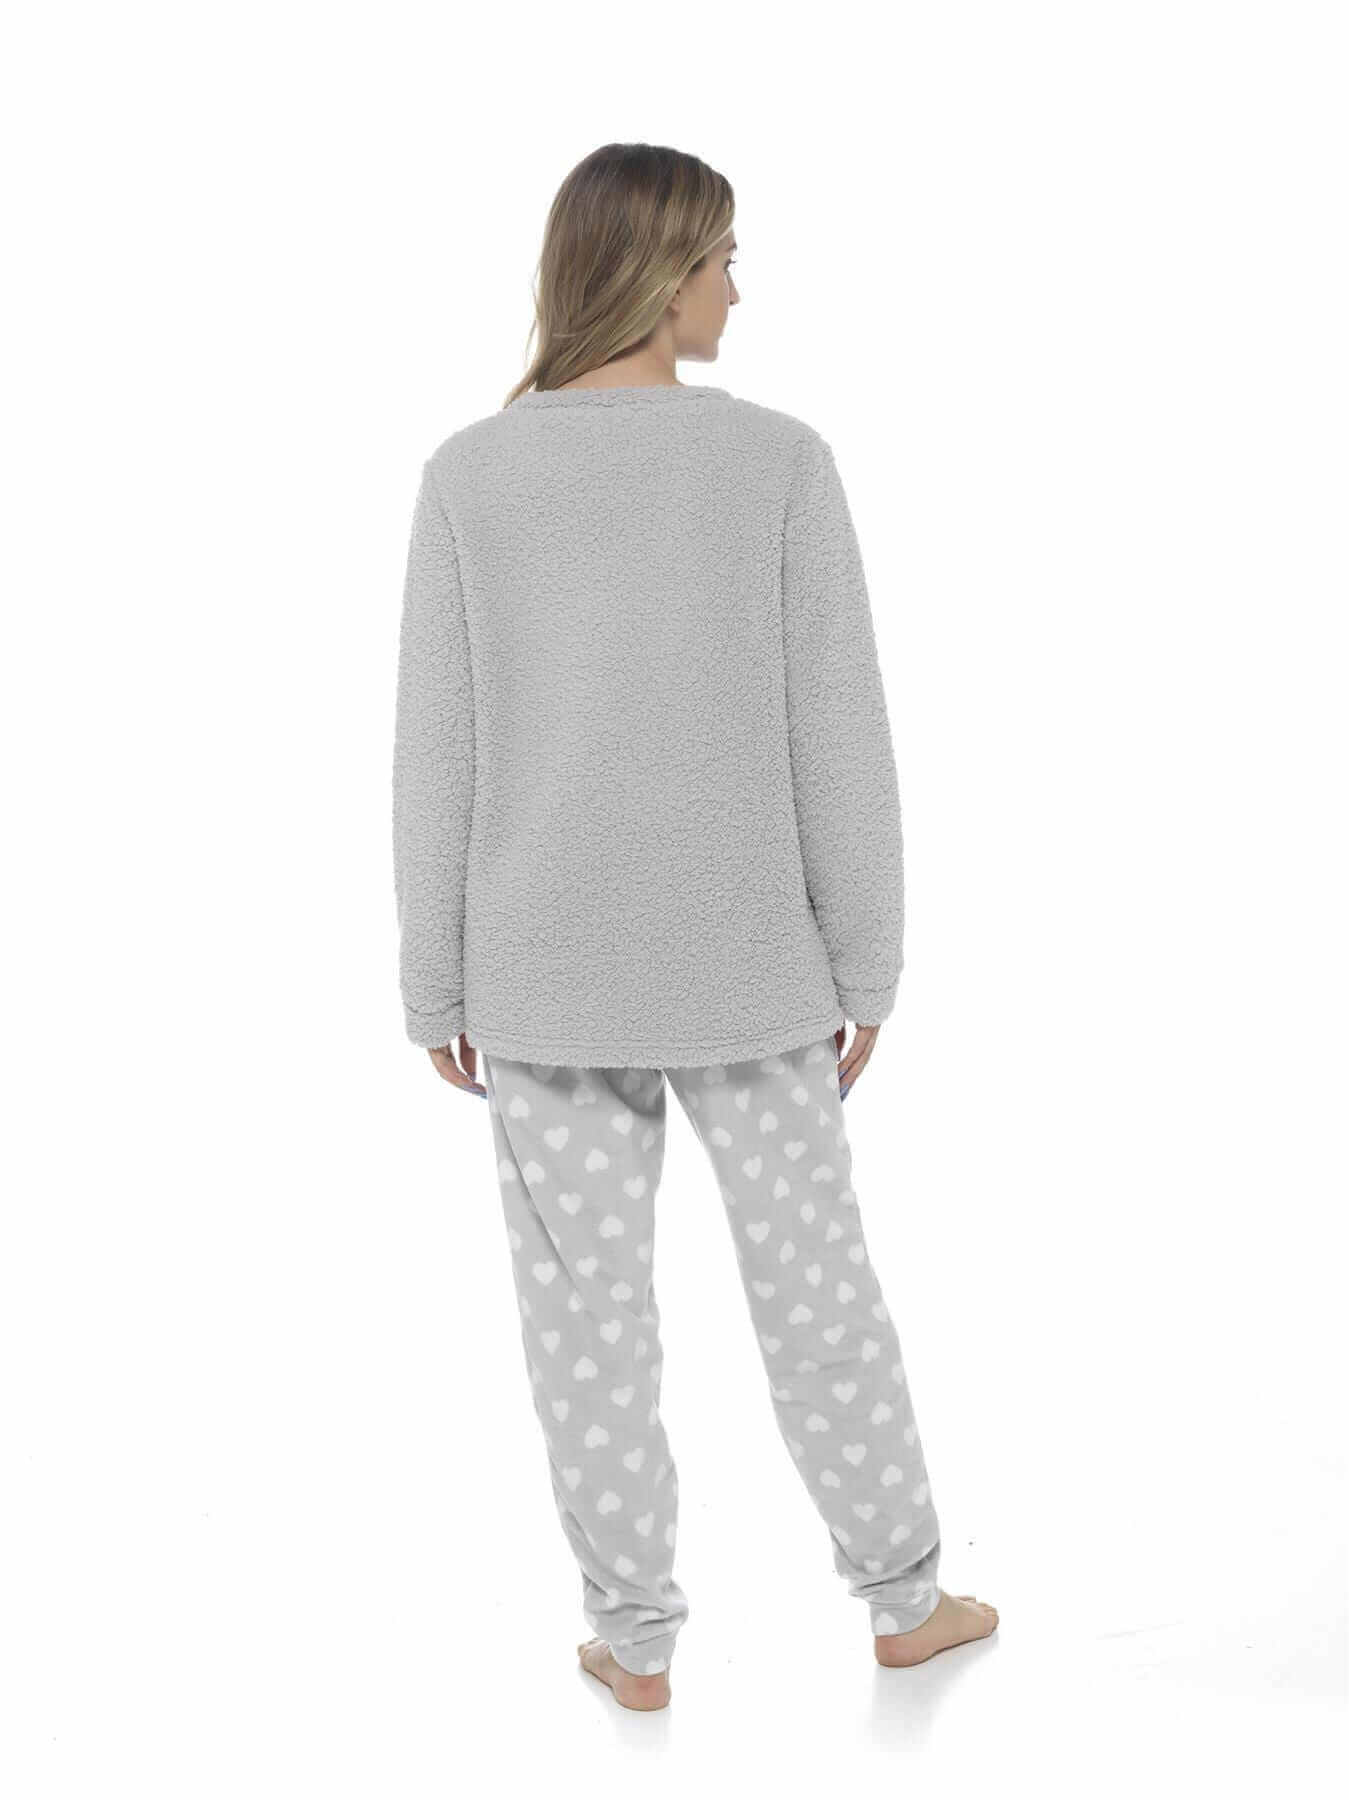 Women's Sloth Snuggle Teddy Fleece Pyjama Set. Buy now for £20.00. A Pyjamas by Daisy Dreamer. 12-14, 16-18, 20-22, 8-10, animal, bridesmaid, christmas, festive, flannel, fleece, grey, gym, heart, hotel, ladies, large, loungewear, medium, nightwear, plush